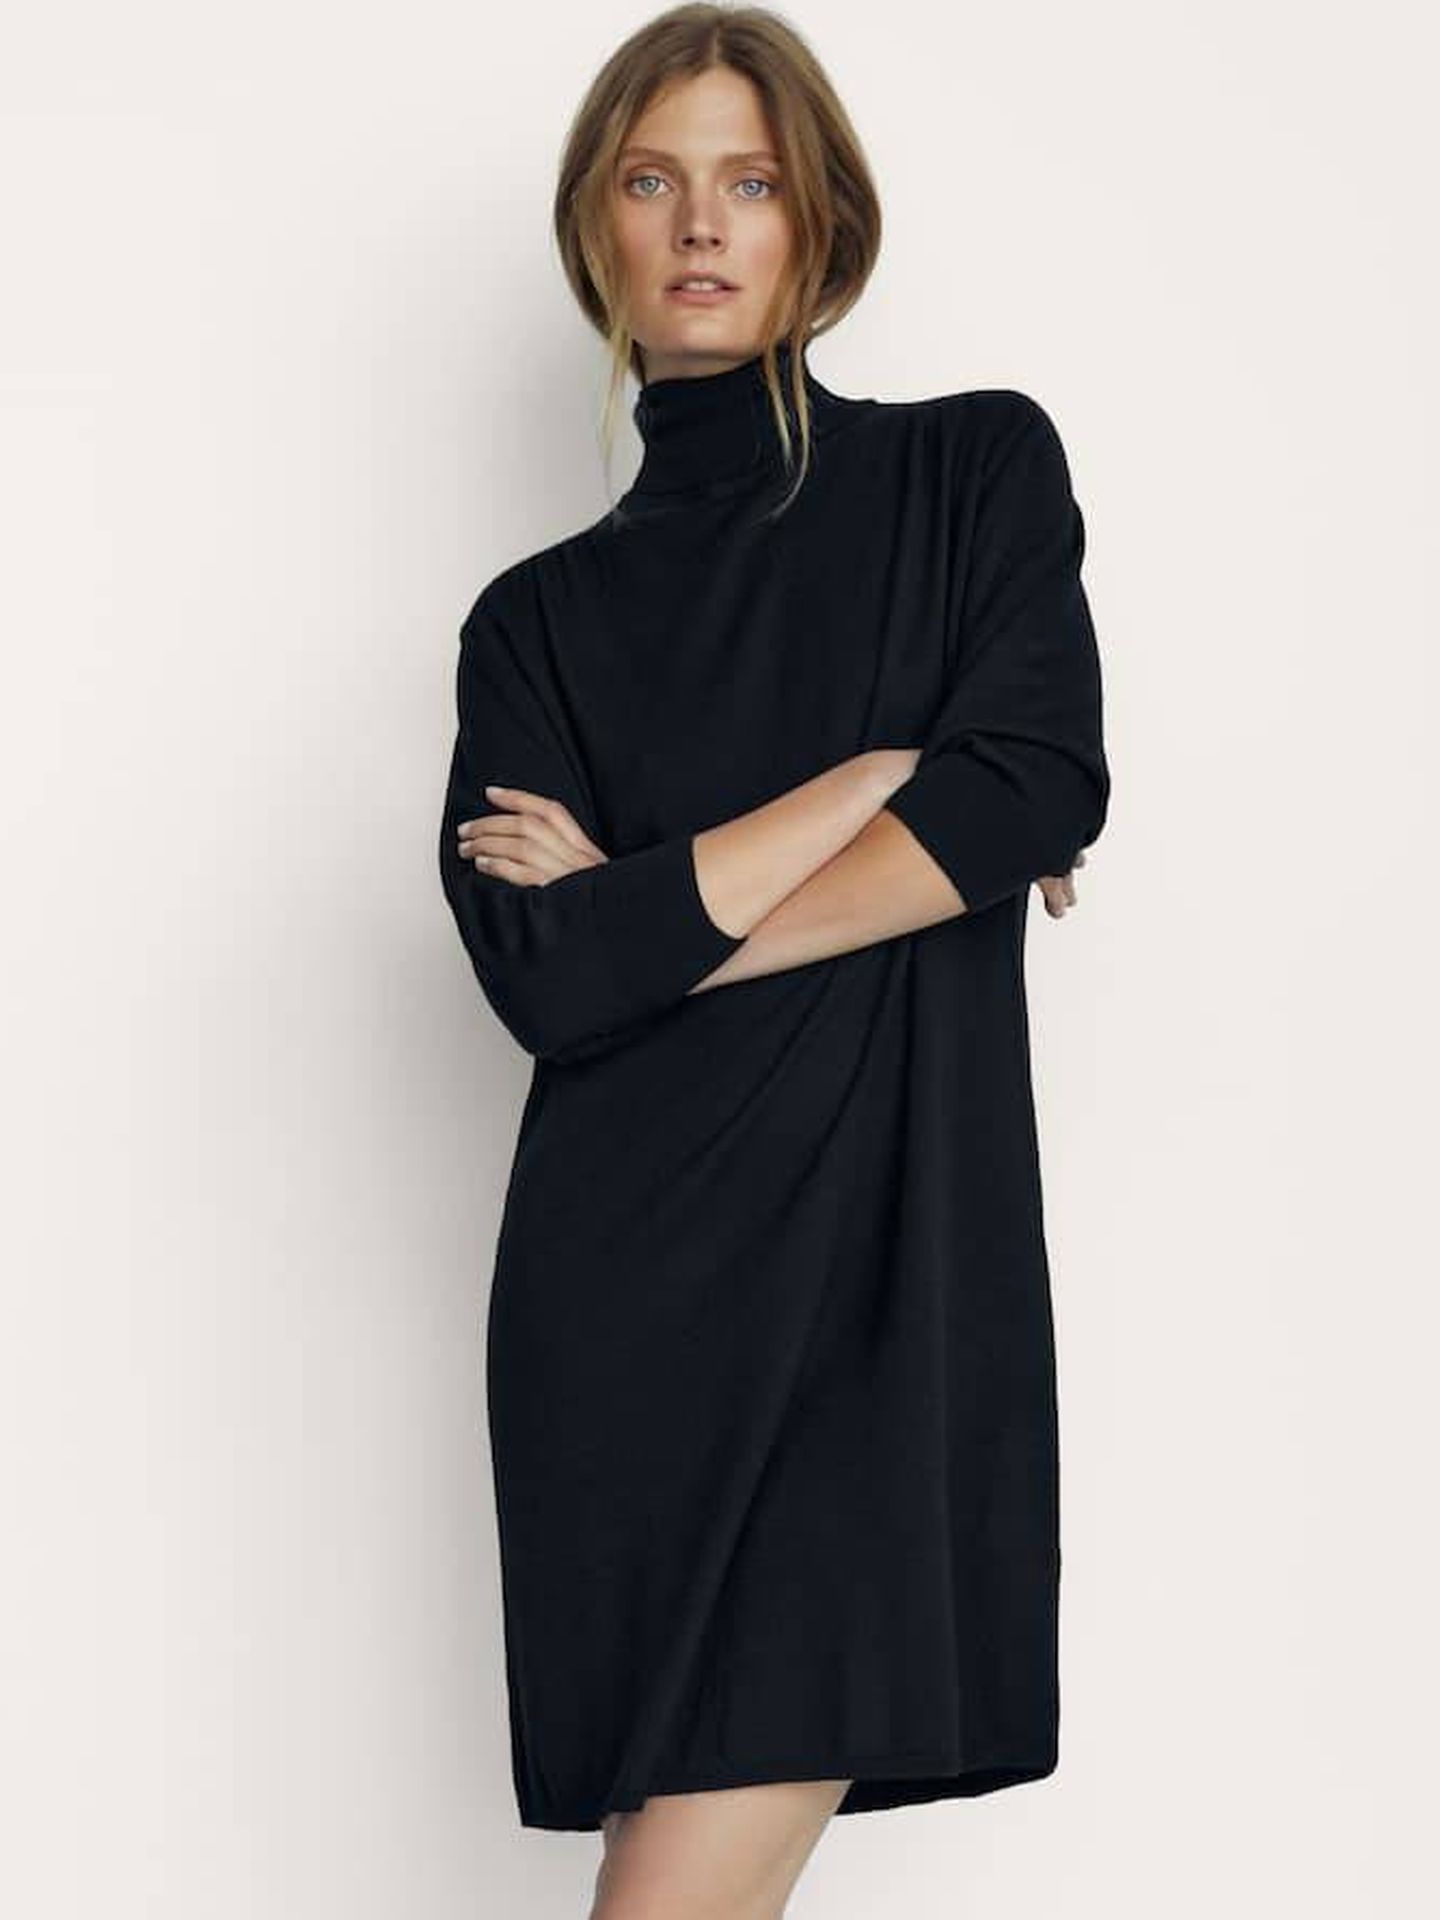 Vestido negro de Massimo Dutti. (Cortesía)